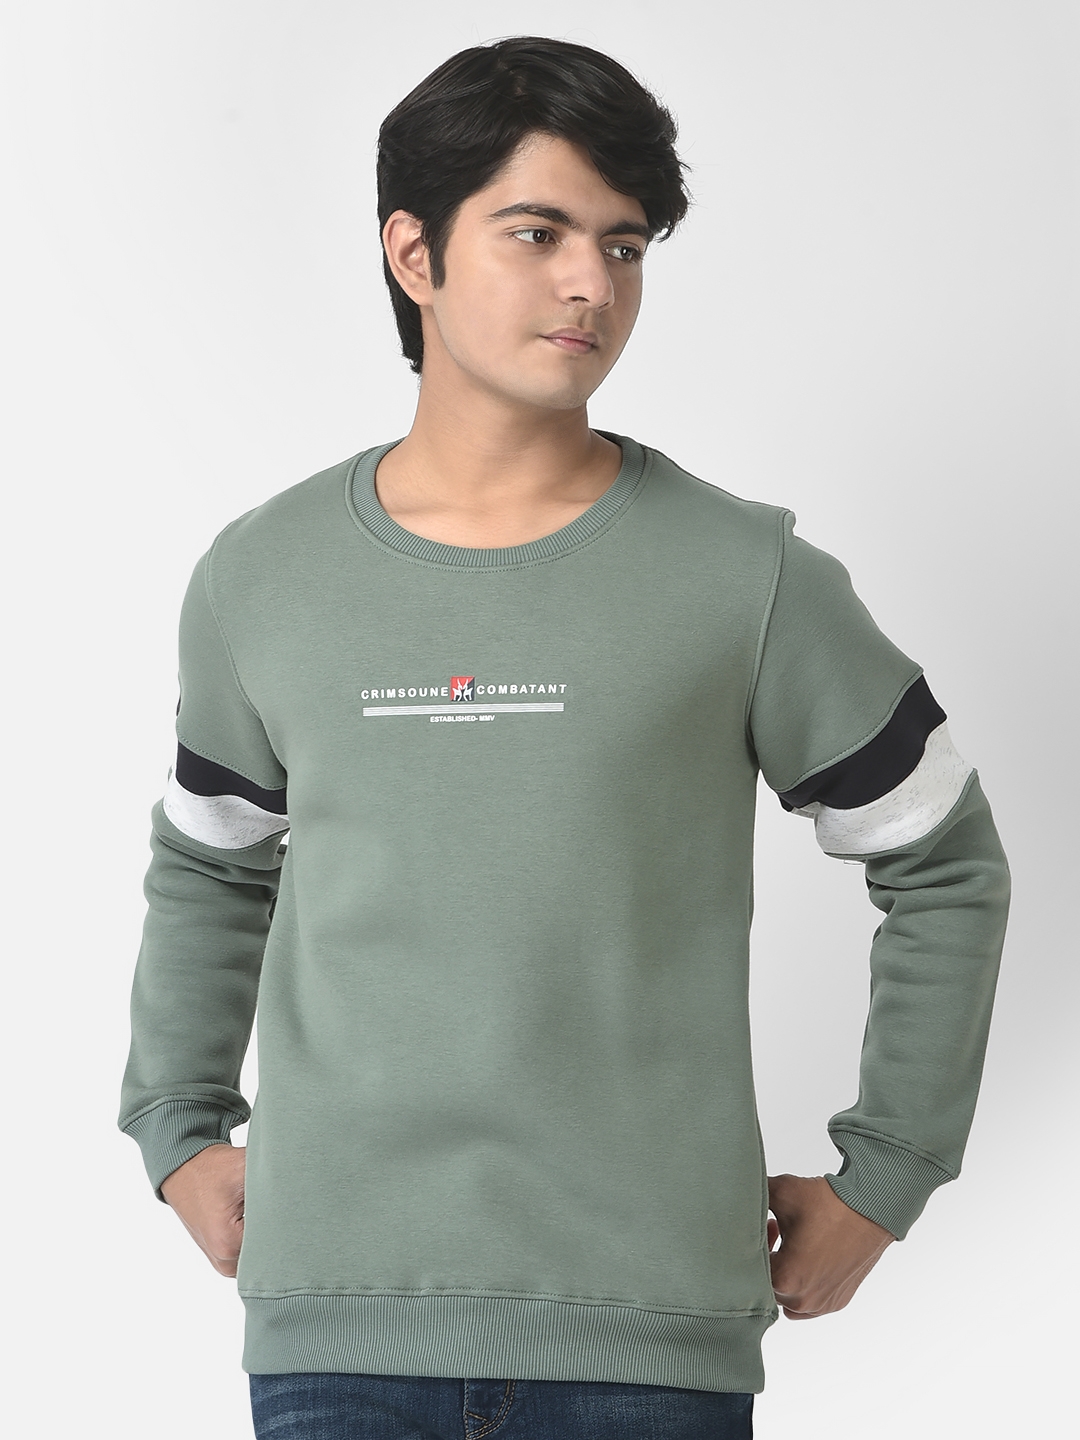 Crimsoune Club Boys Oil-Green Brand-Logo Sweatshirt